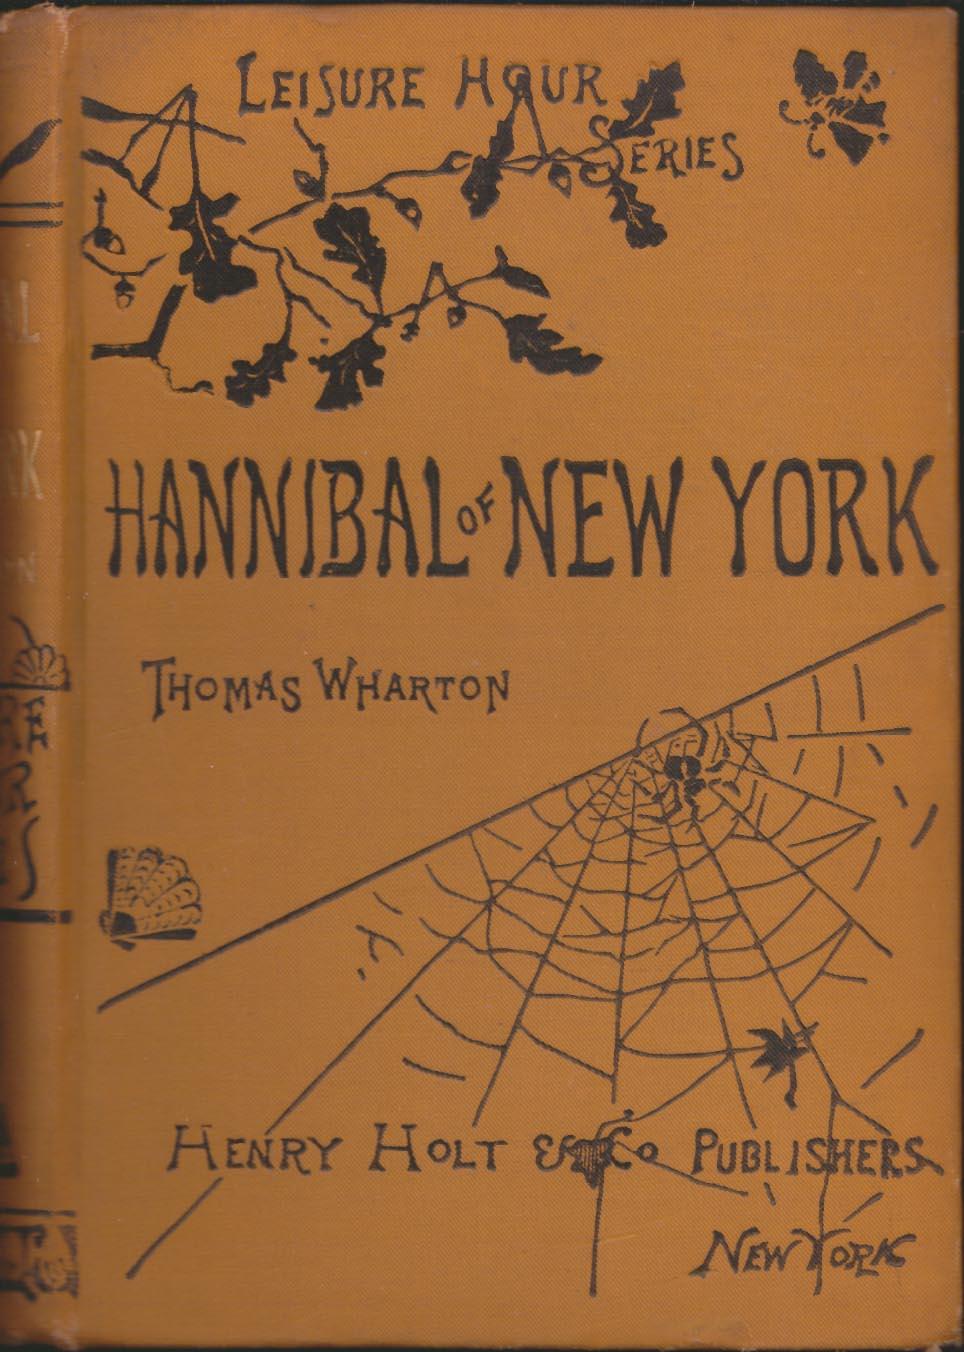 Hannibal of New York - Wharton (Leisure Hour Series/Henry Holt) (image)